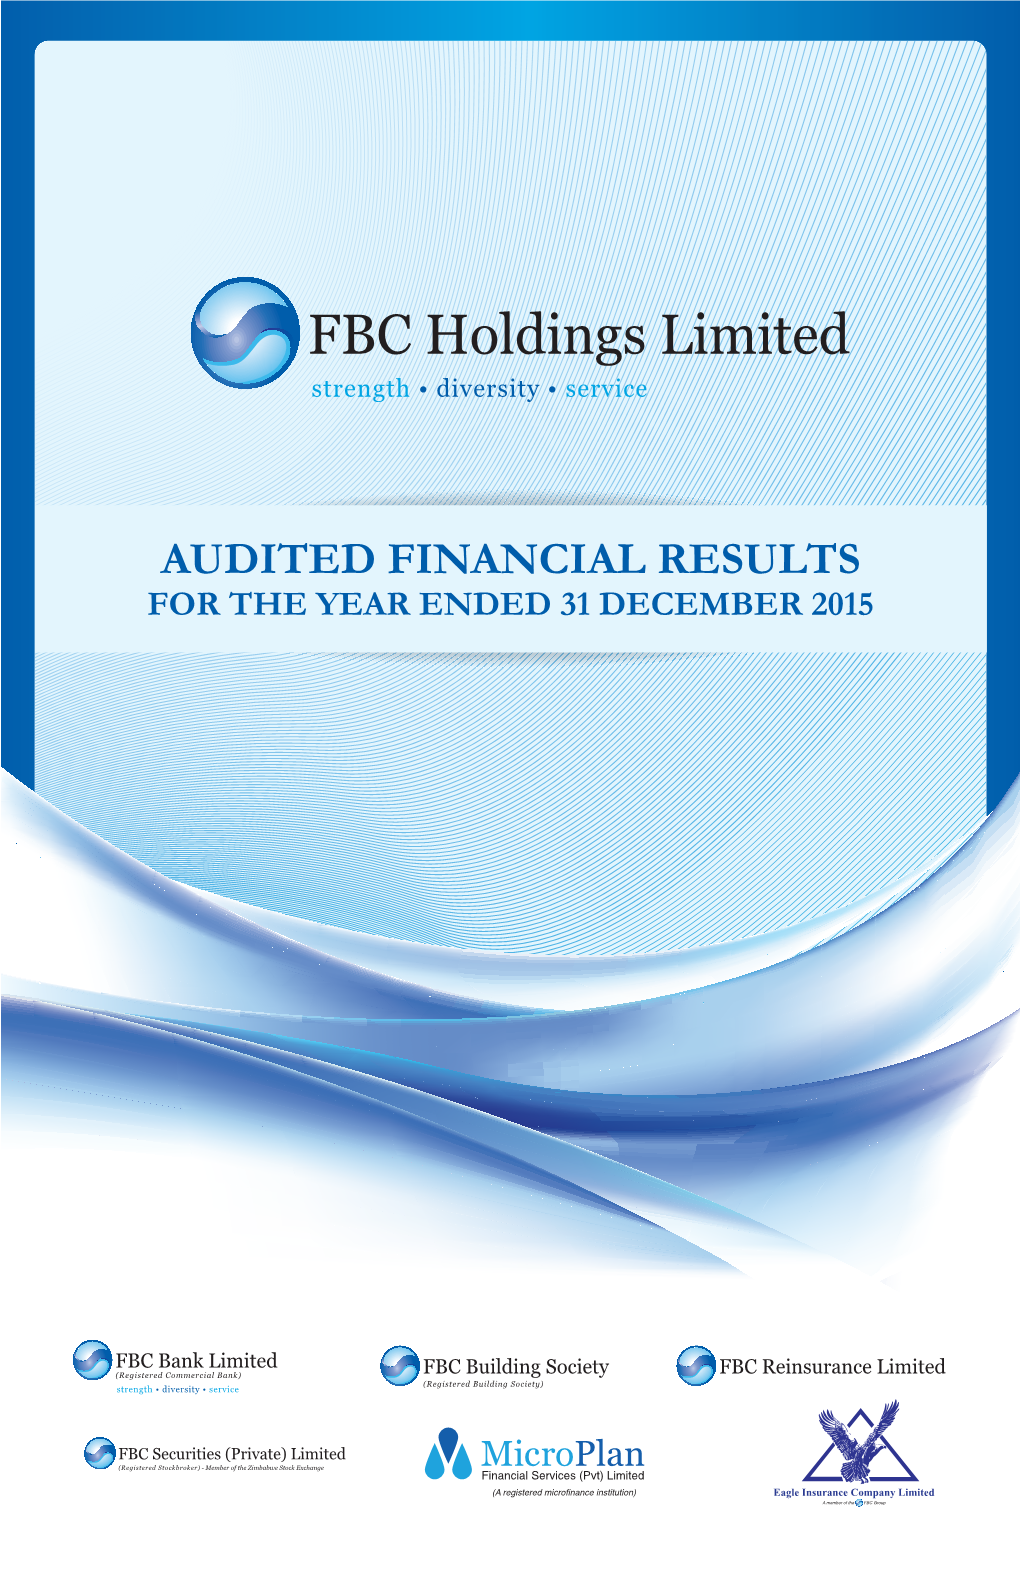 FBC Holdings Limited Strength • Diversity • Service